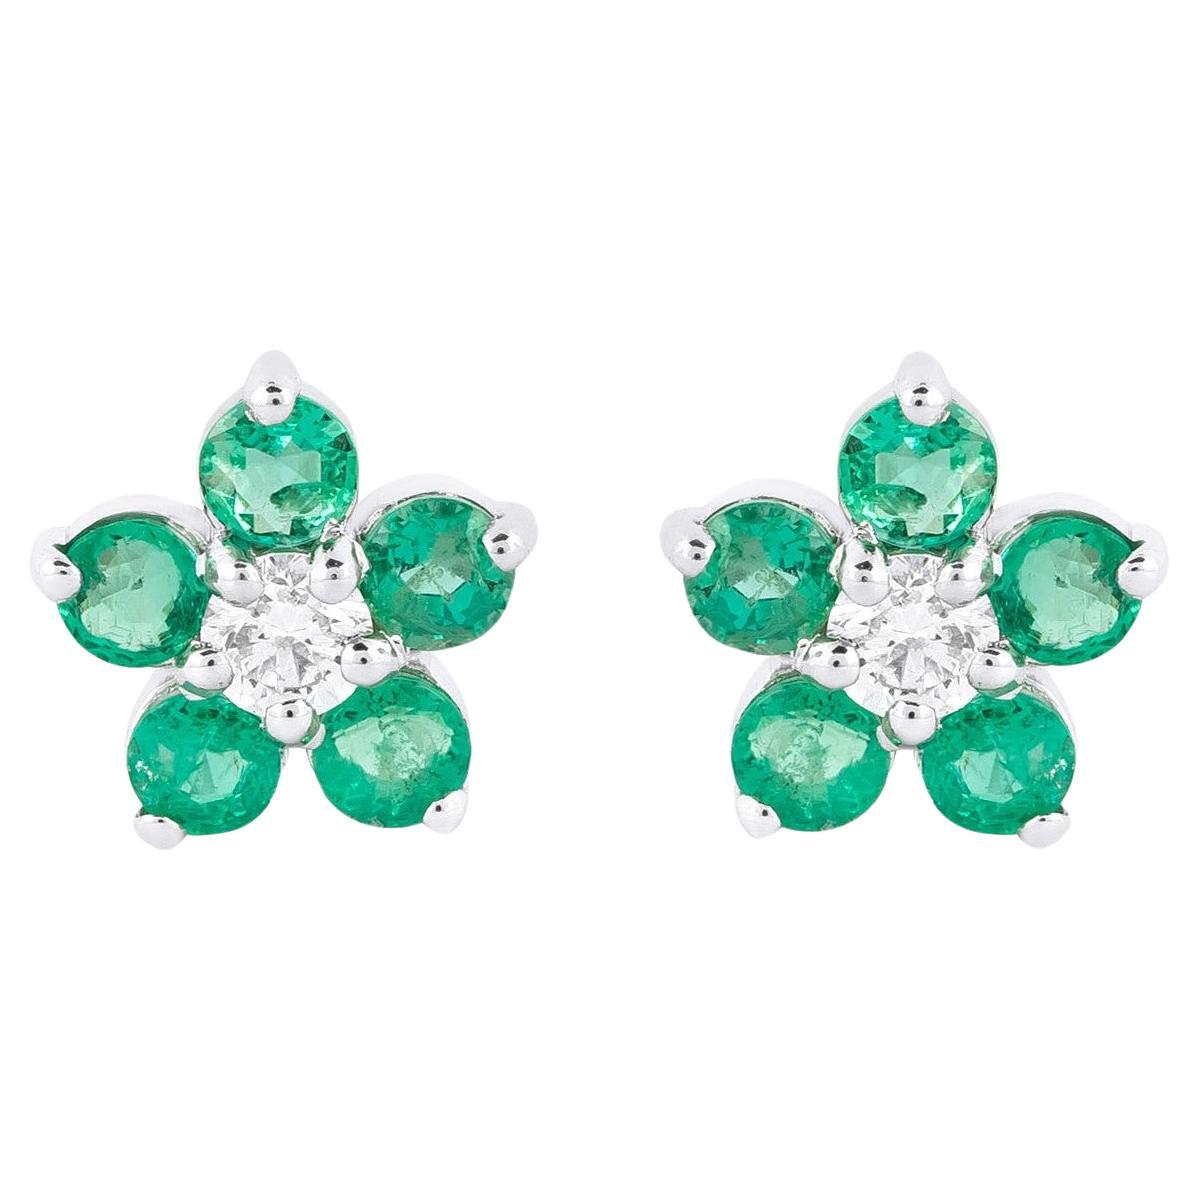 18 Karat Gold 1.28 Carat Diamond and Emerald Flower Modulation Earrings